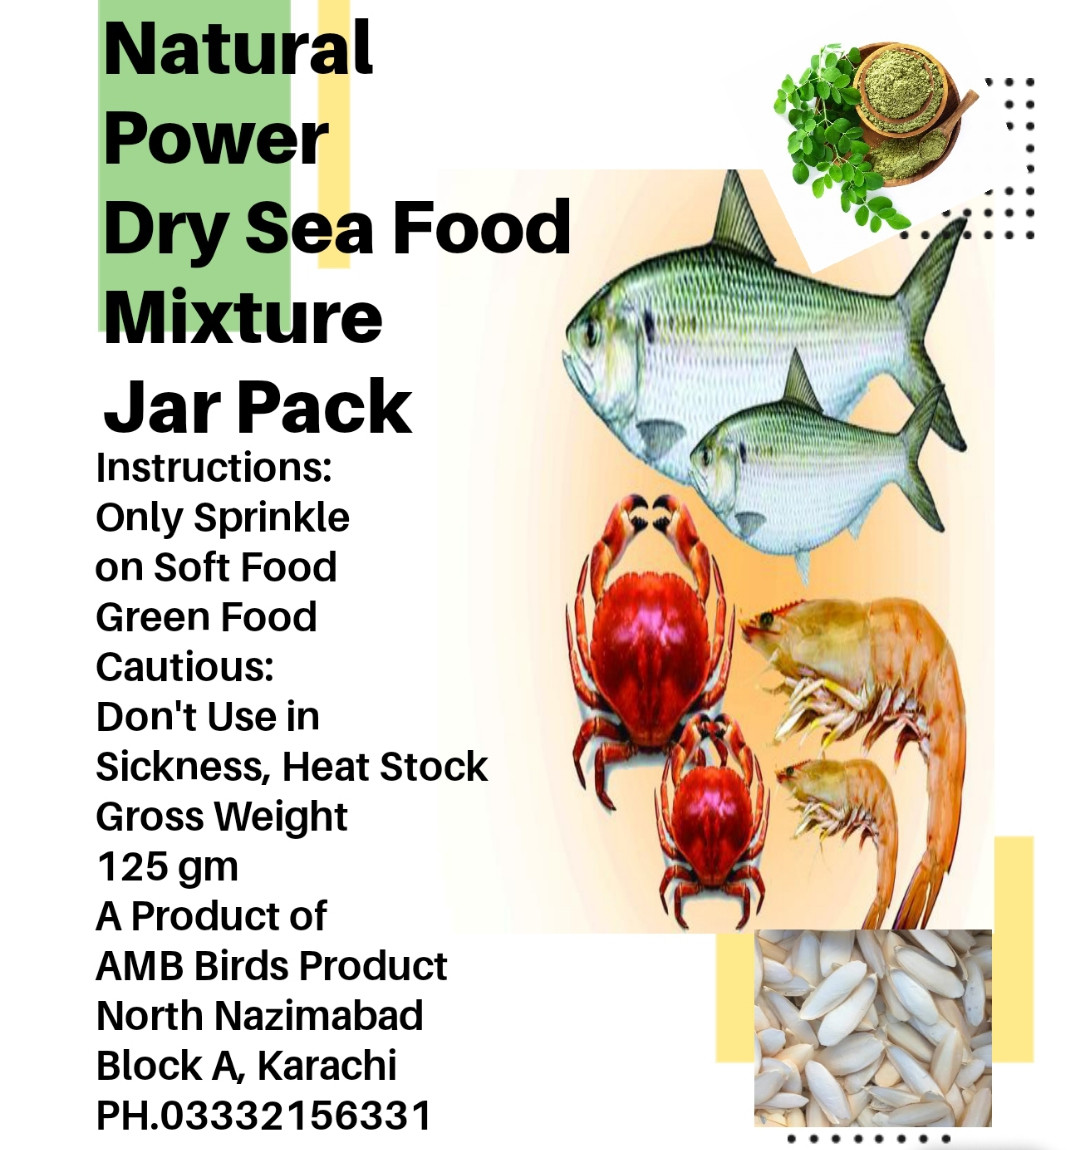 Natural Power Dry Sea Food Mixture